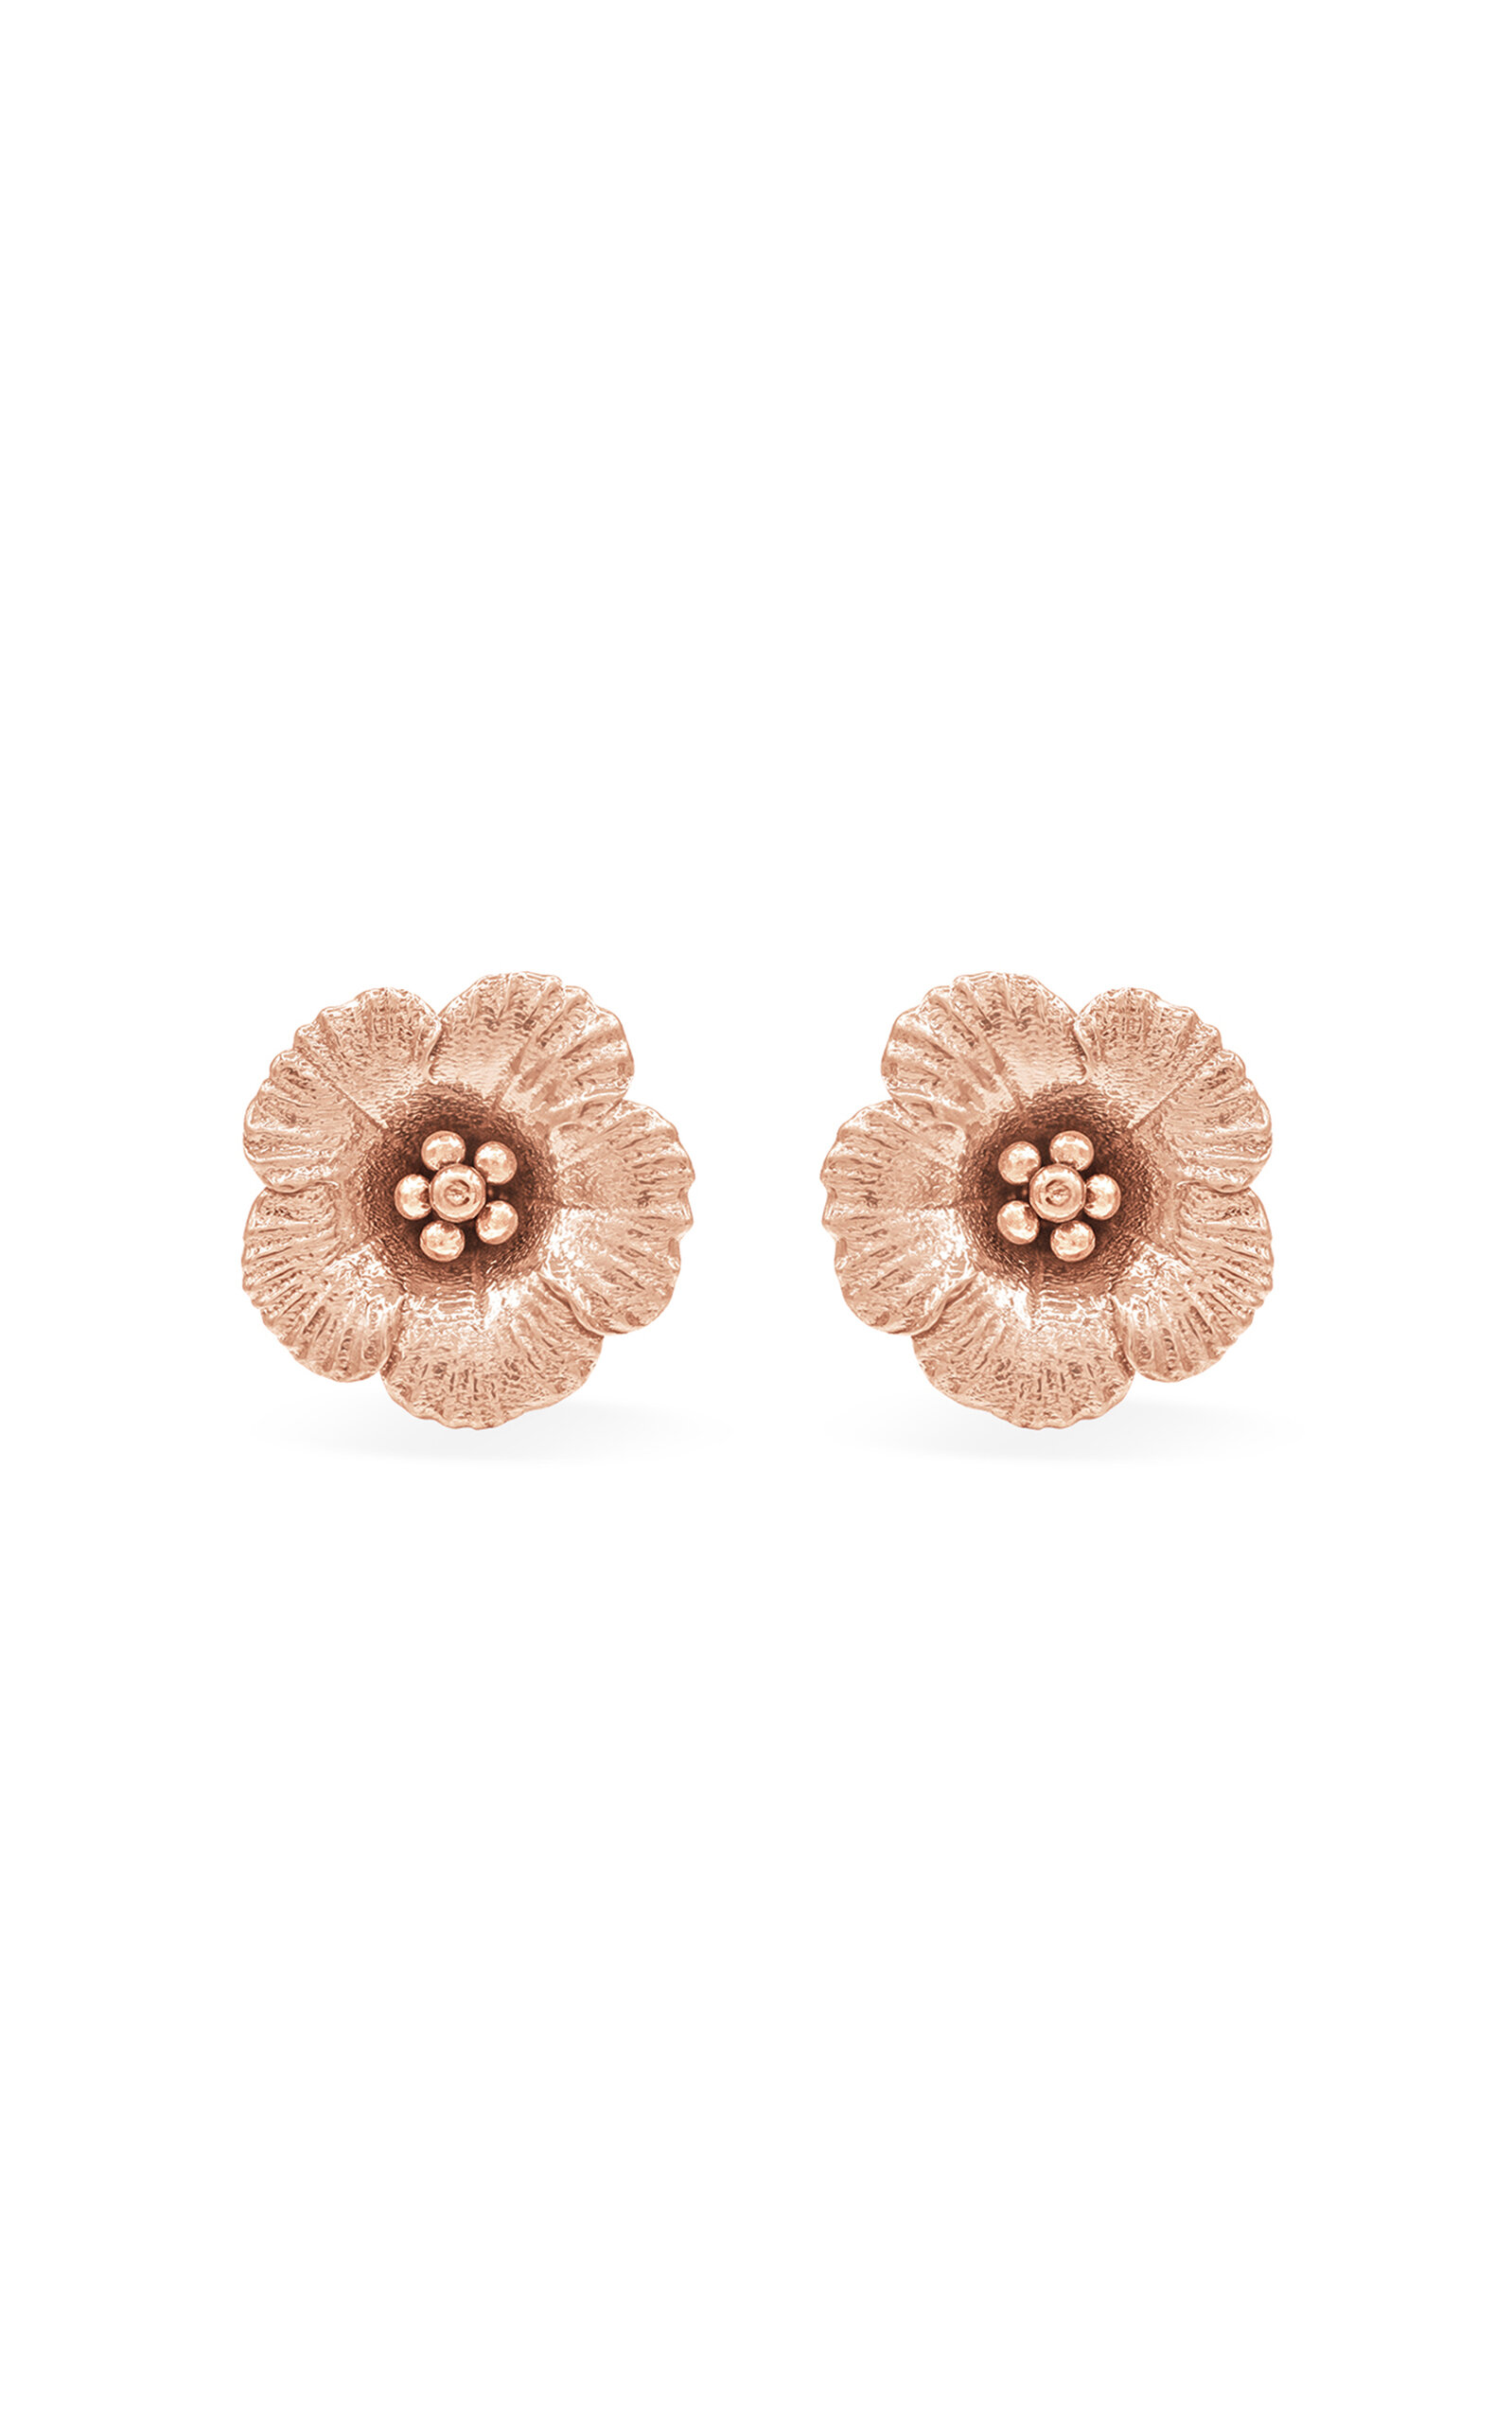 Petunia 14K Rose and Yellow Gold Earrings